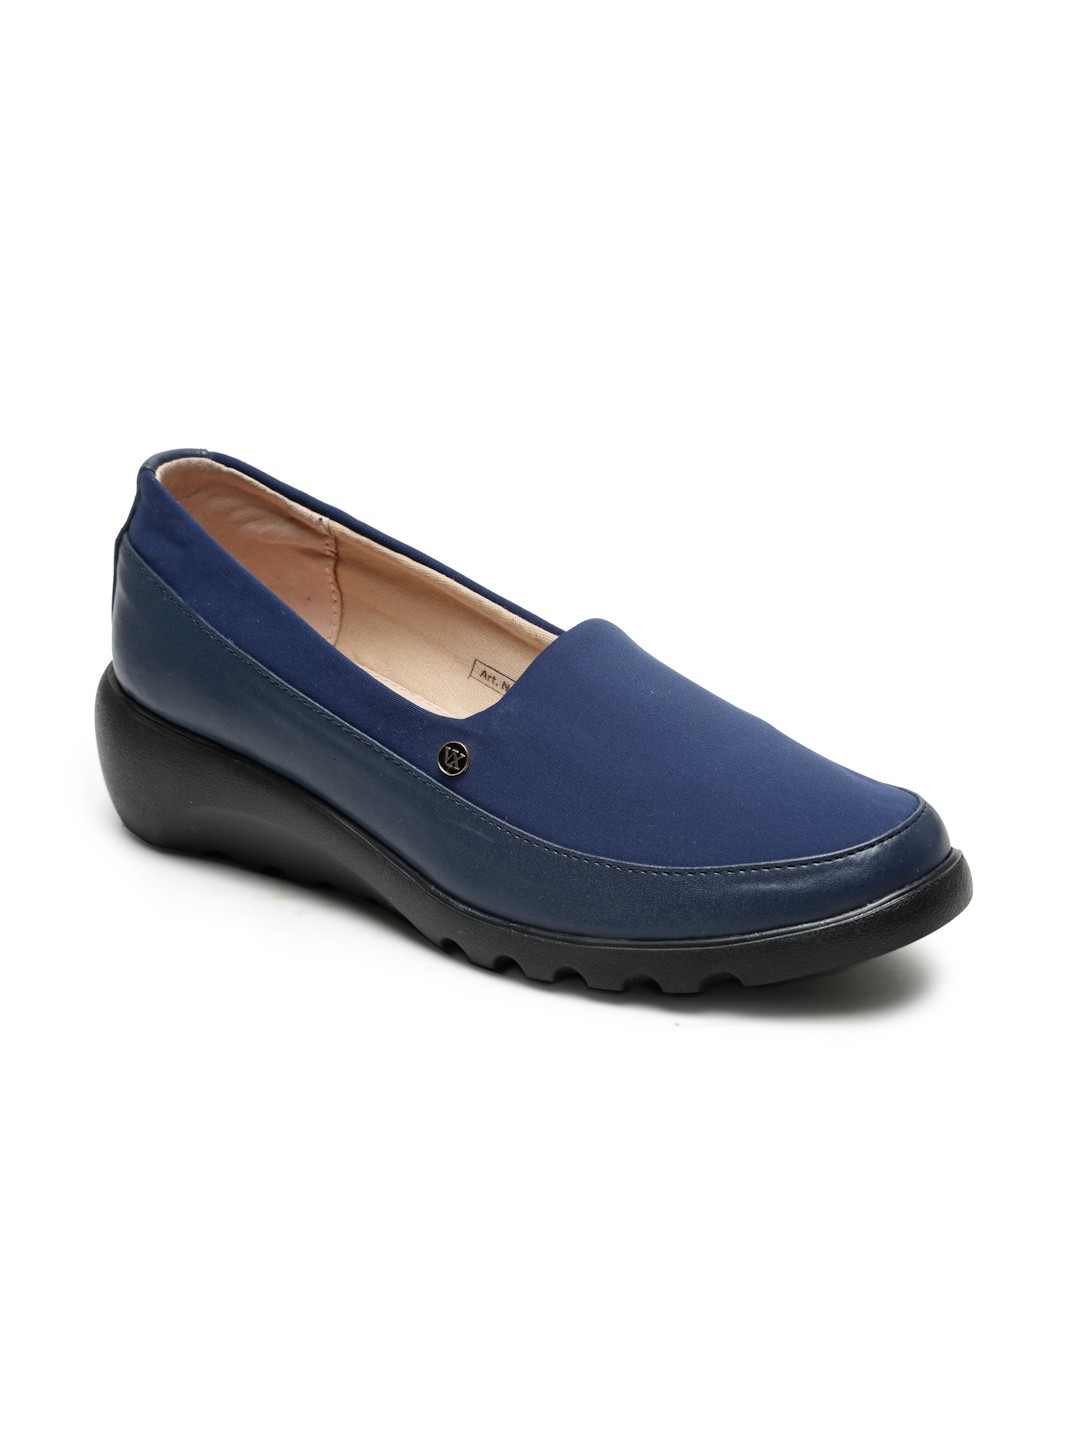 Buy Von Wellx Germany Comfort Women's Blue Casual Shoes Elsa Online in Nagpur